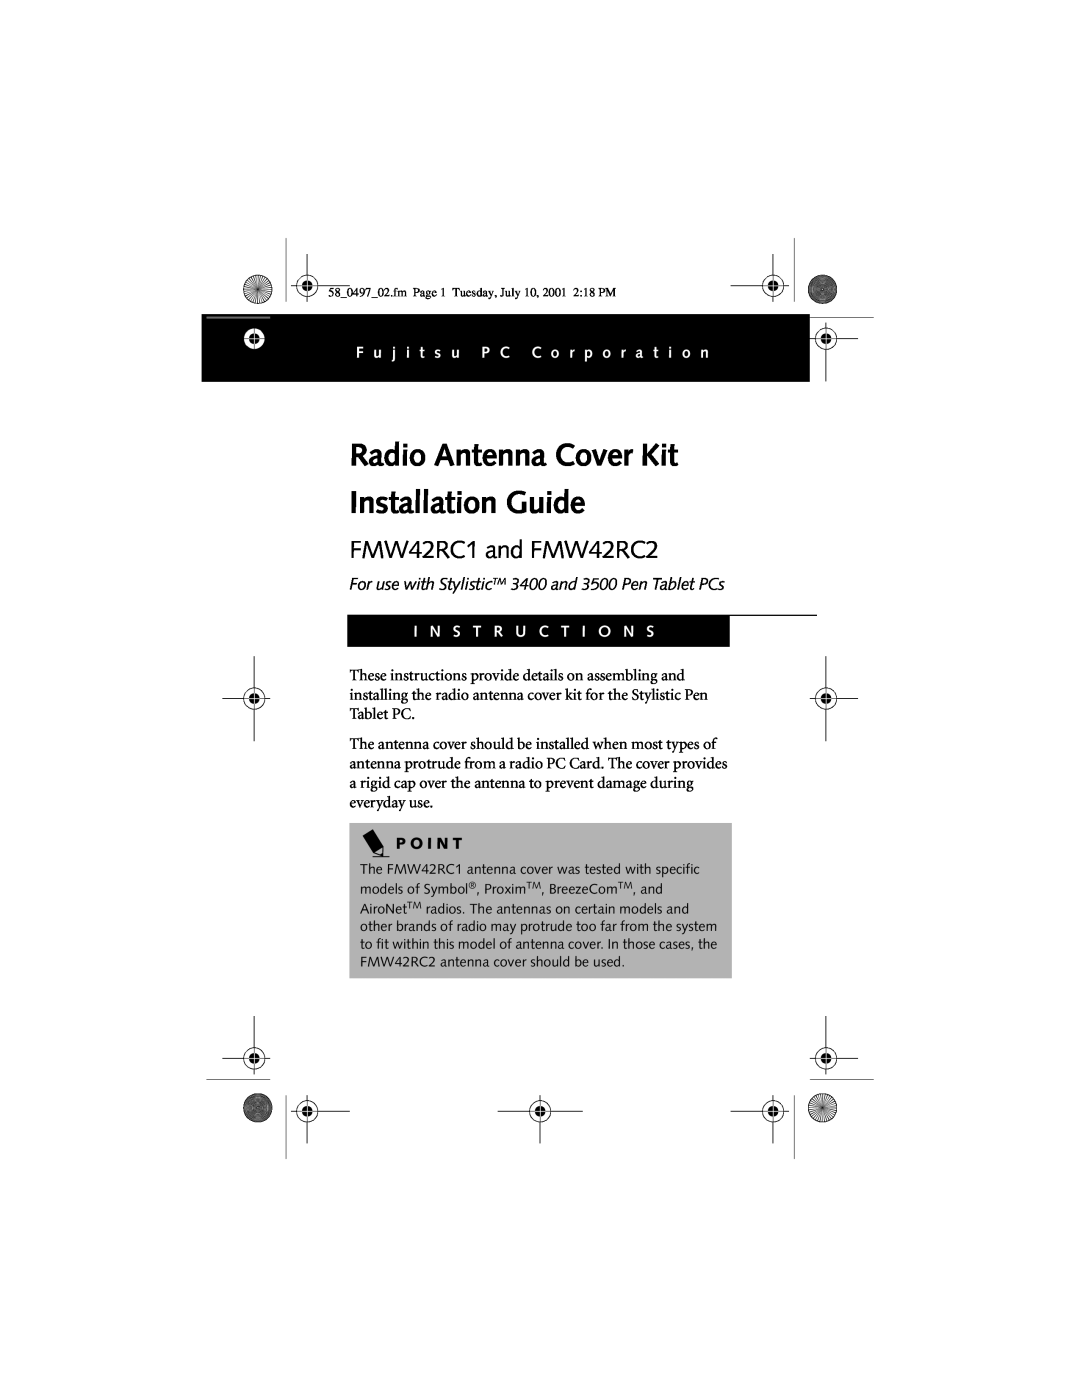 Fujitsu manual Radio Antenna Cover Kit Installation Guide, FMW42RC1 and FMW42RC2, I N S T R U C T I O N S, P O I N T 